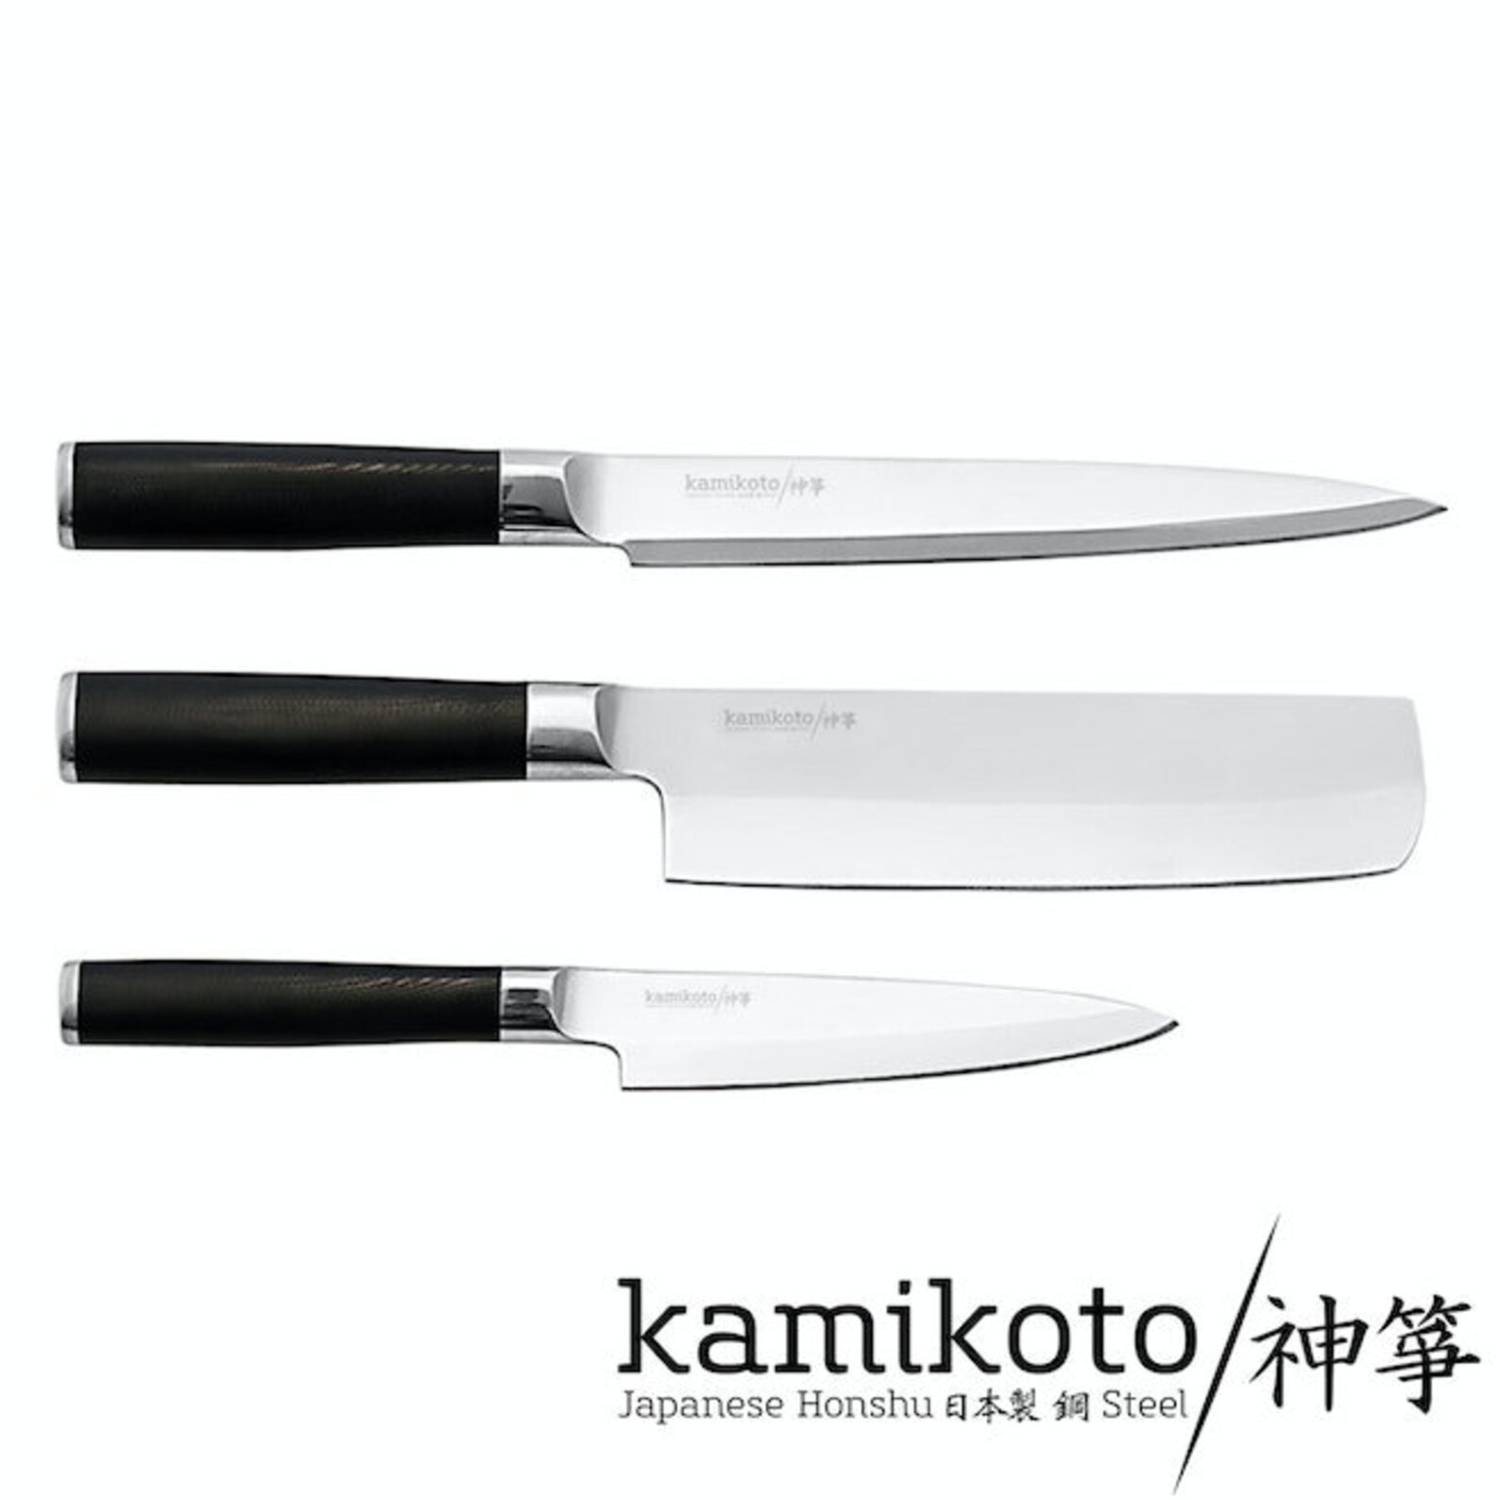 kamikoto Kanpeki Knife Set Handcrafted Japanese Ibaraki steel blades #1Choice Among Chefs